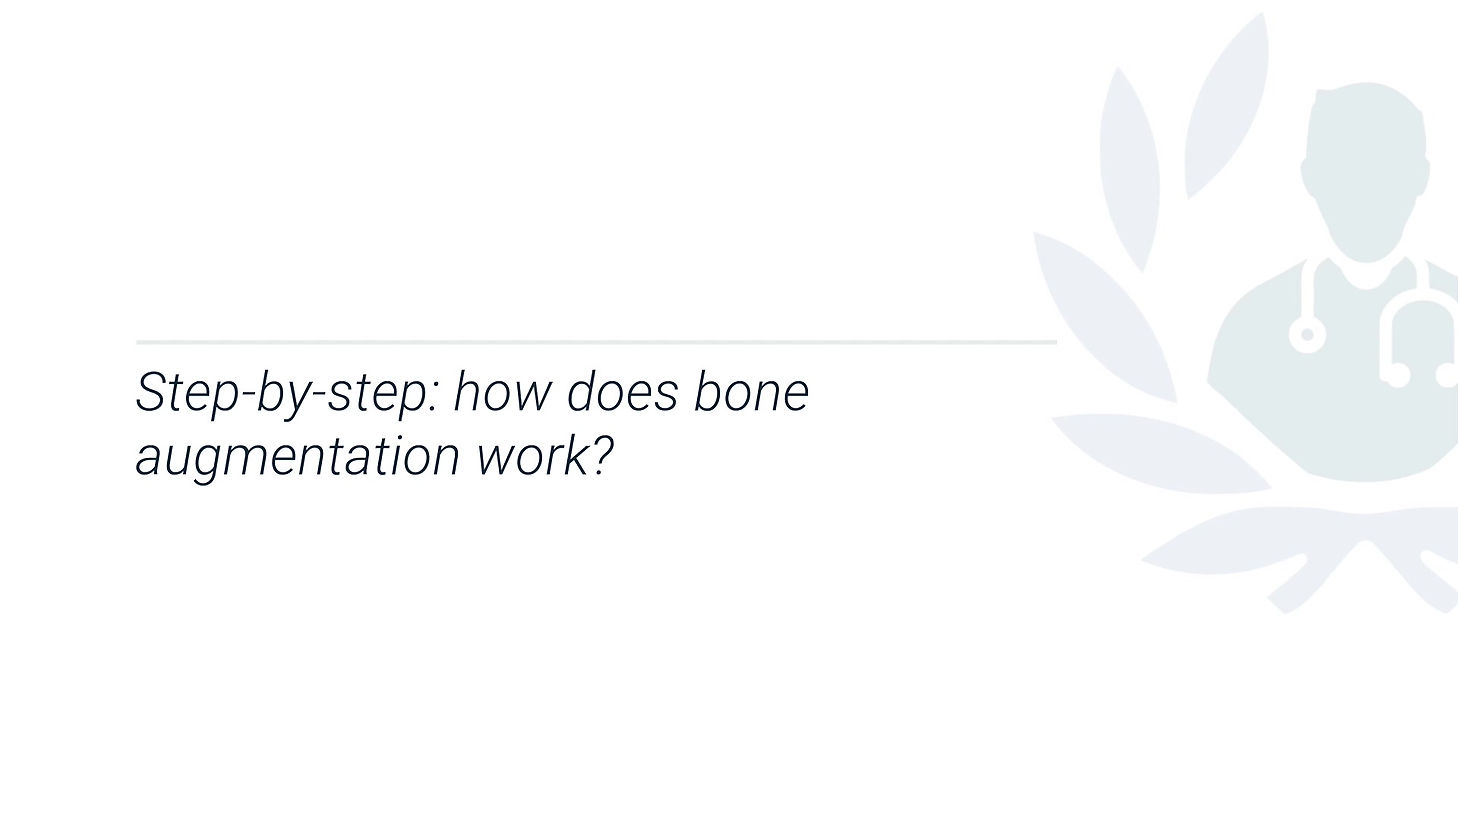 How does bone augmentation work?